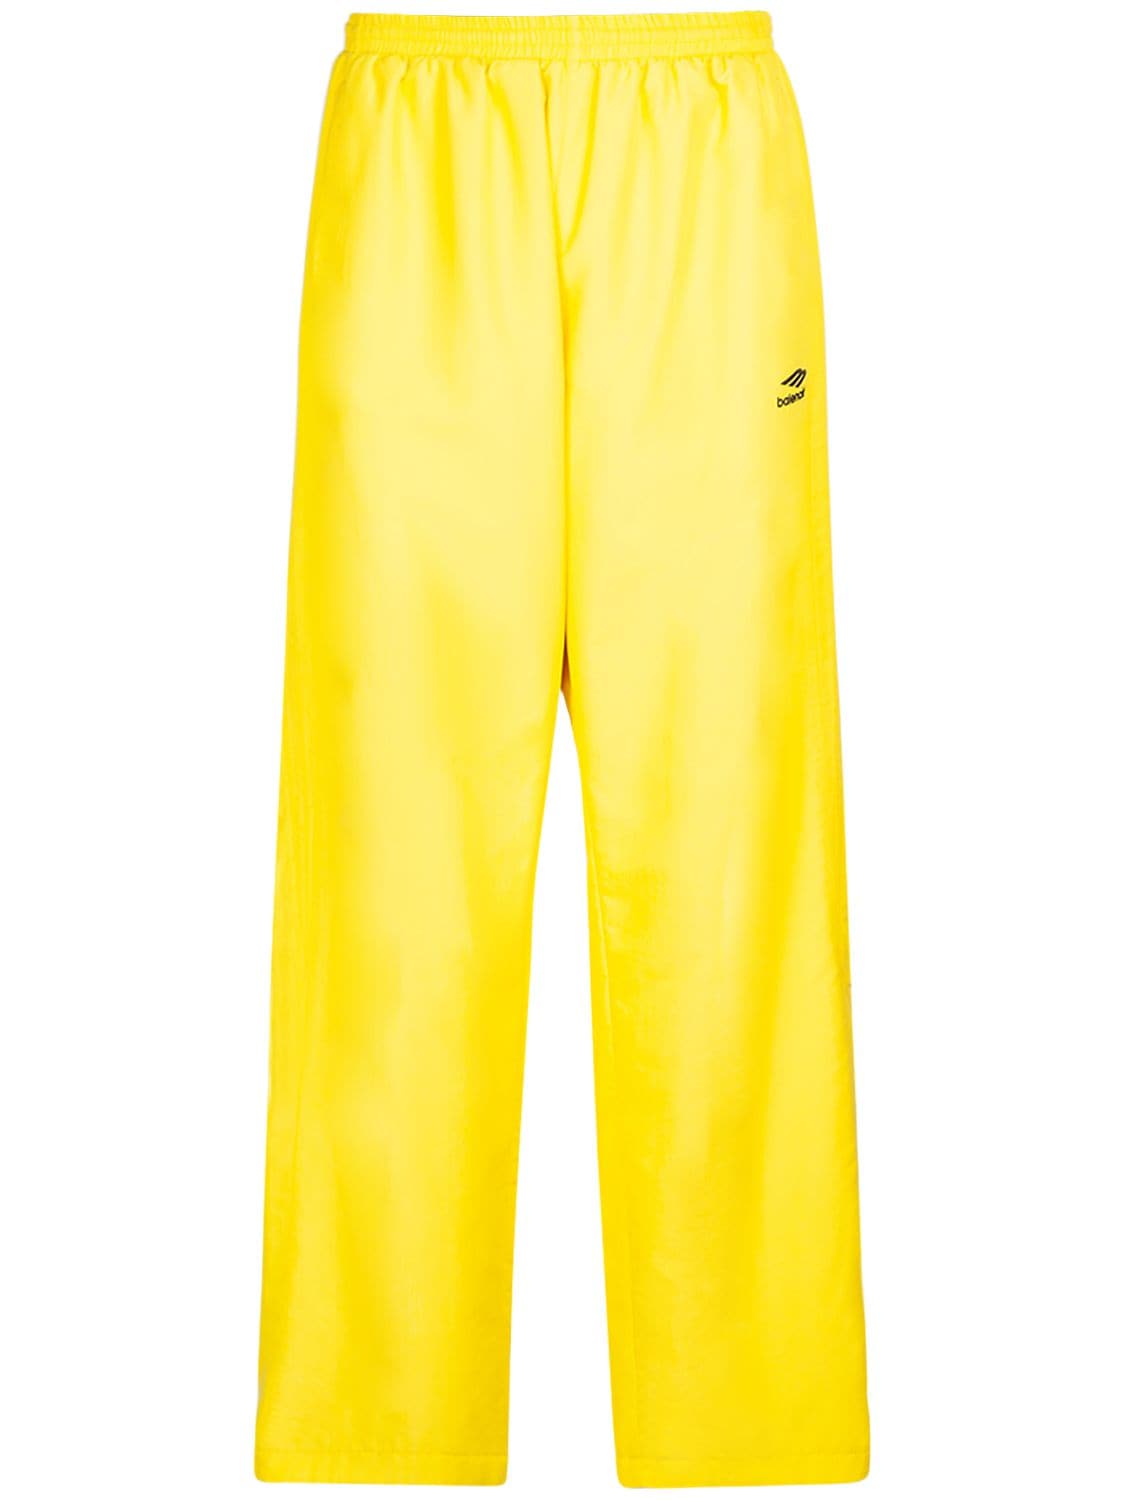 Balenciaga Nylon Trousers In Citrus Yellow